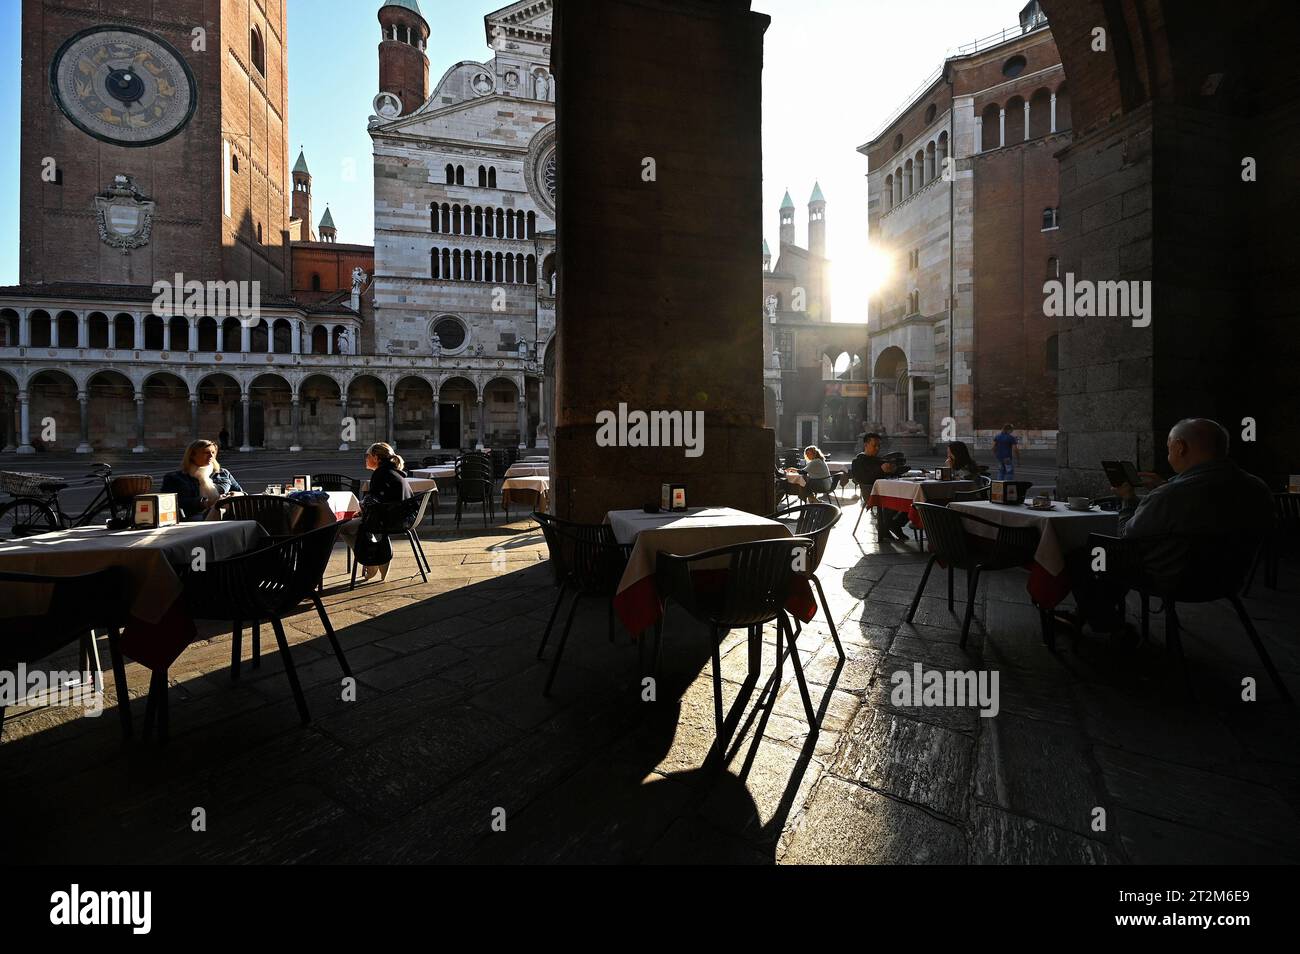 Strassencaf an der Piazza del comune, Cremona, Lombardei, Italien Foto Stock